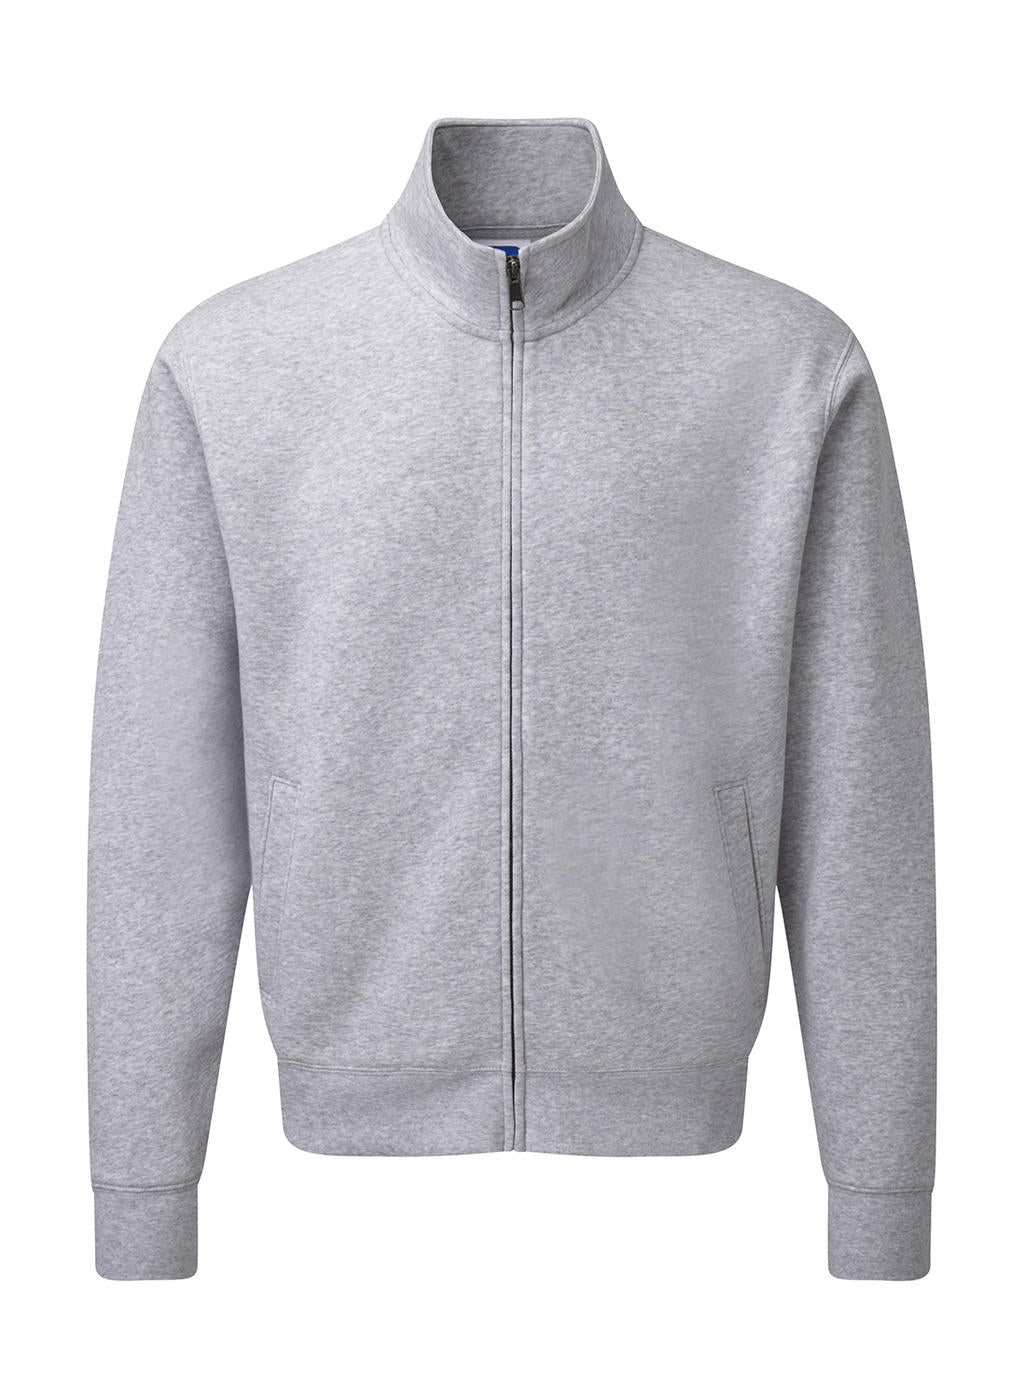 Russel Europe Herren Authentic Zipper Sweat Jacke Sweater